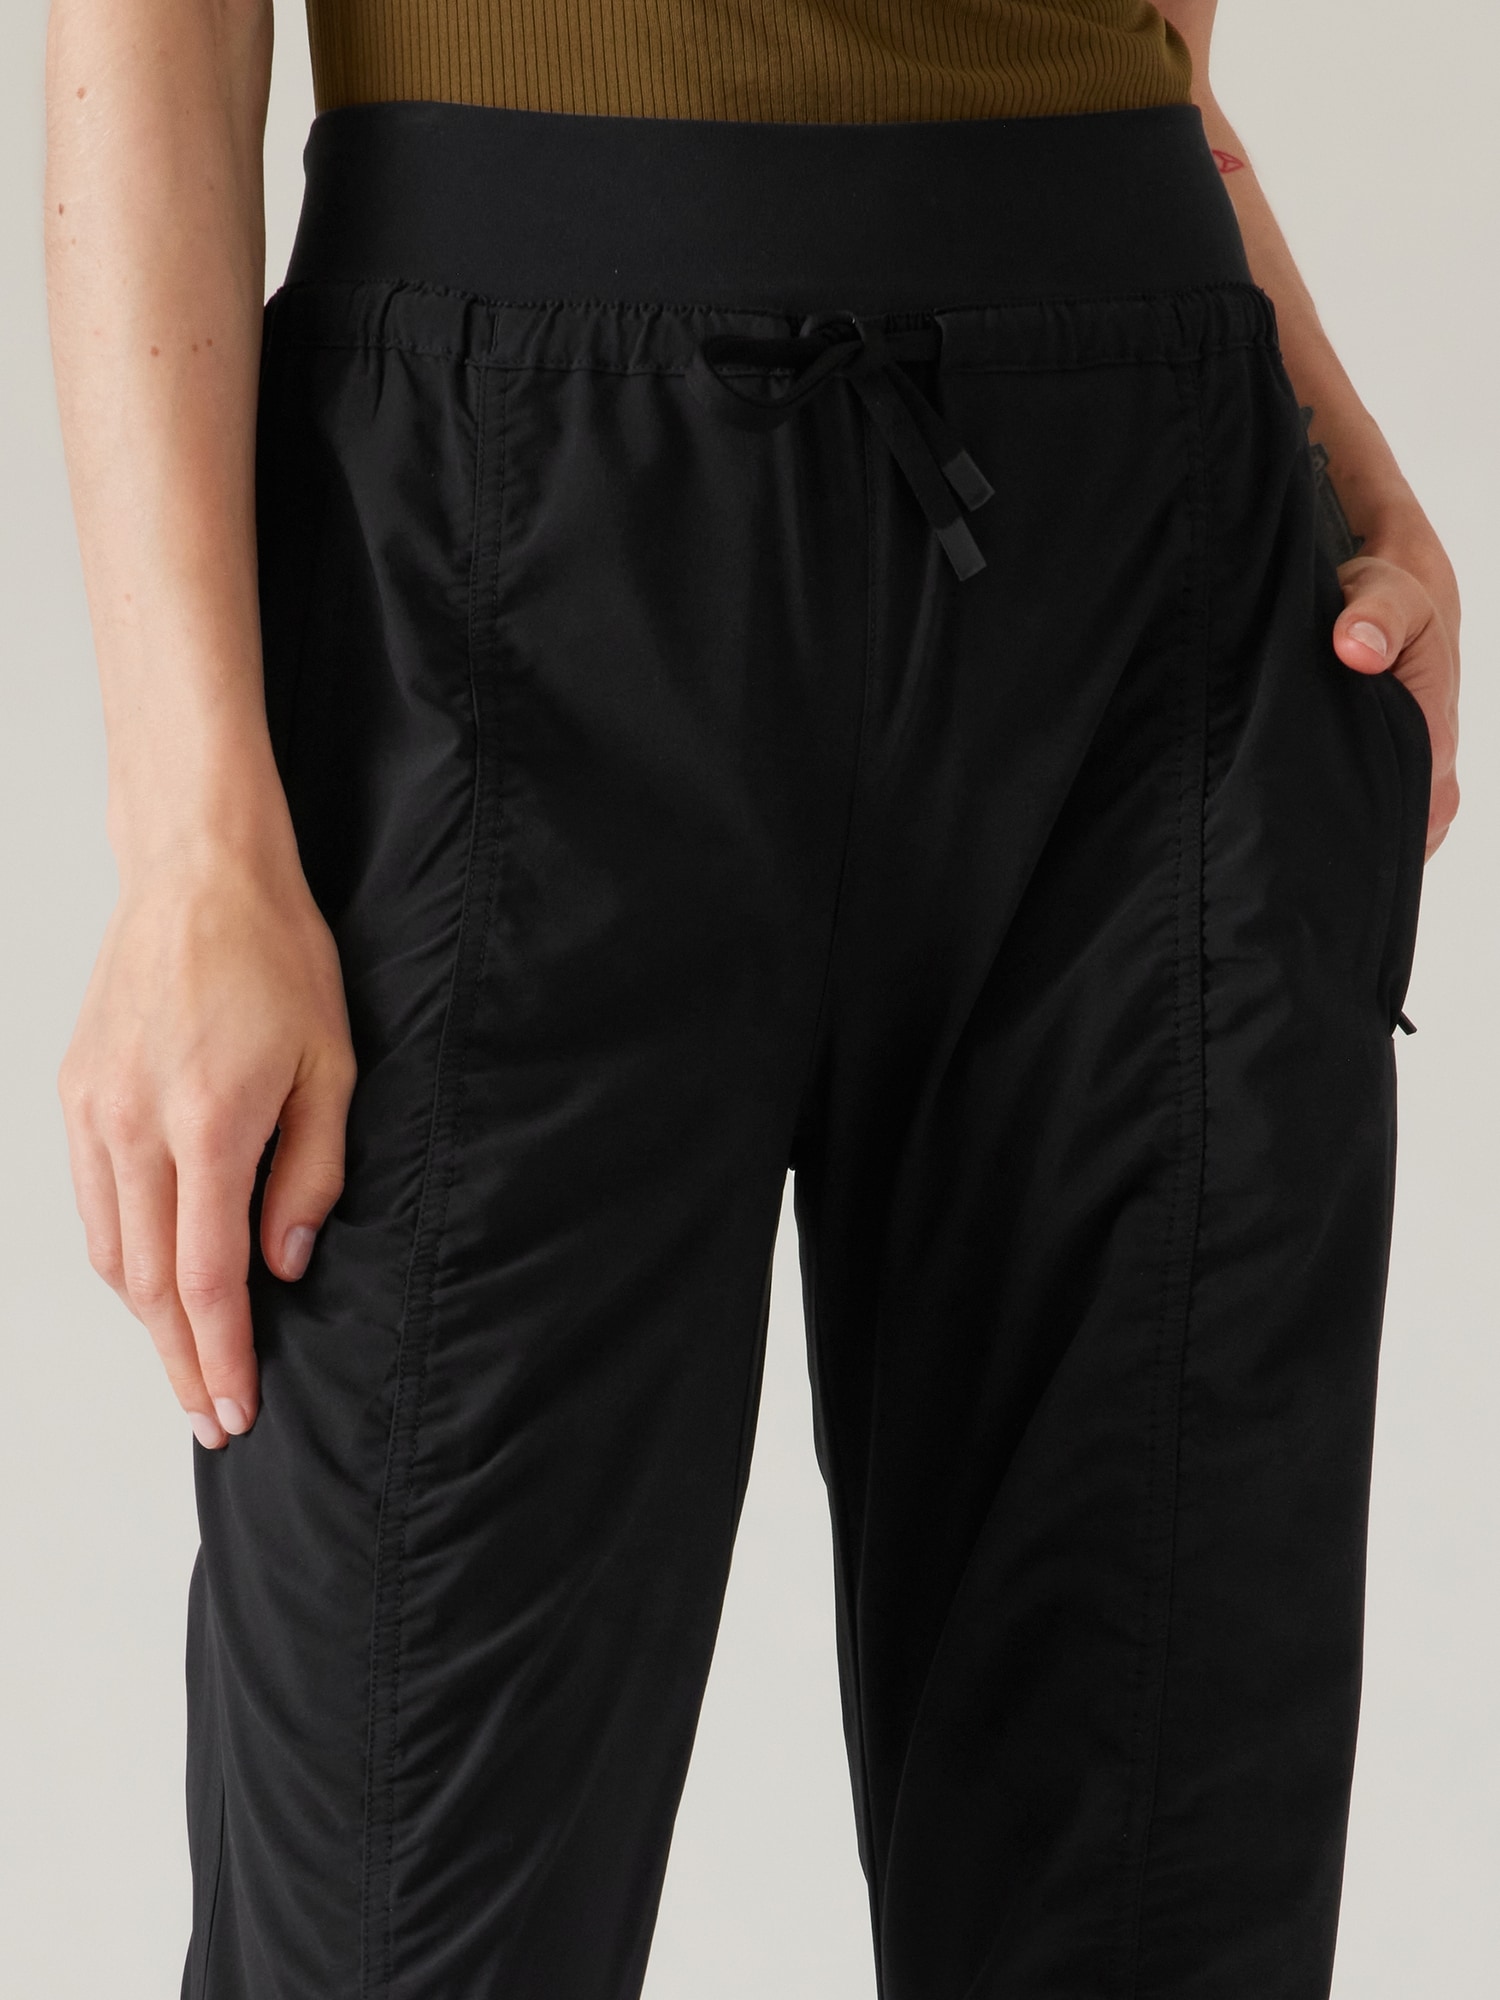 Lululemon Dance Studio Pants Cropped Size 6 Black Yoga Pockets